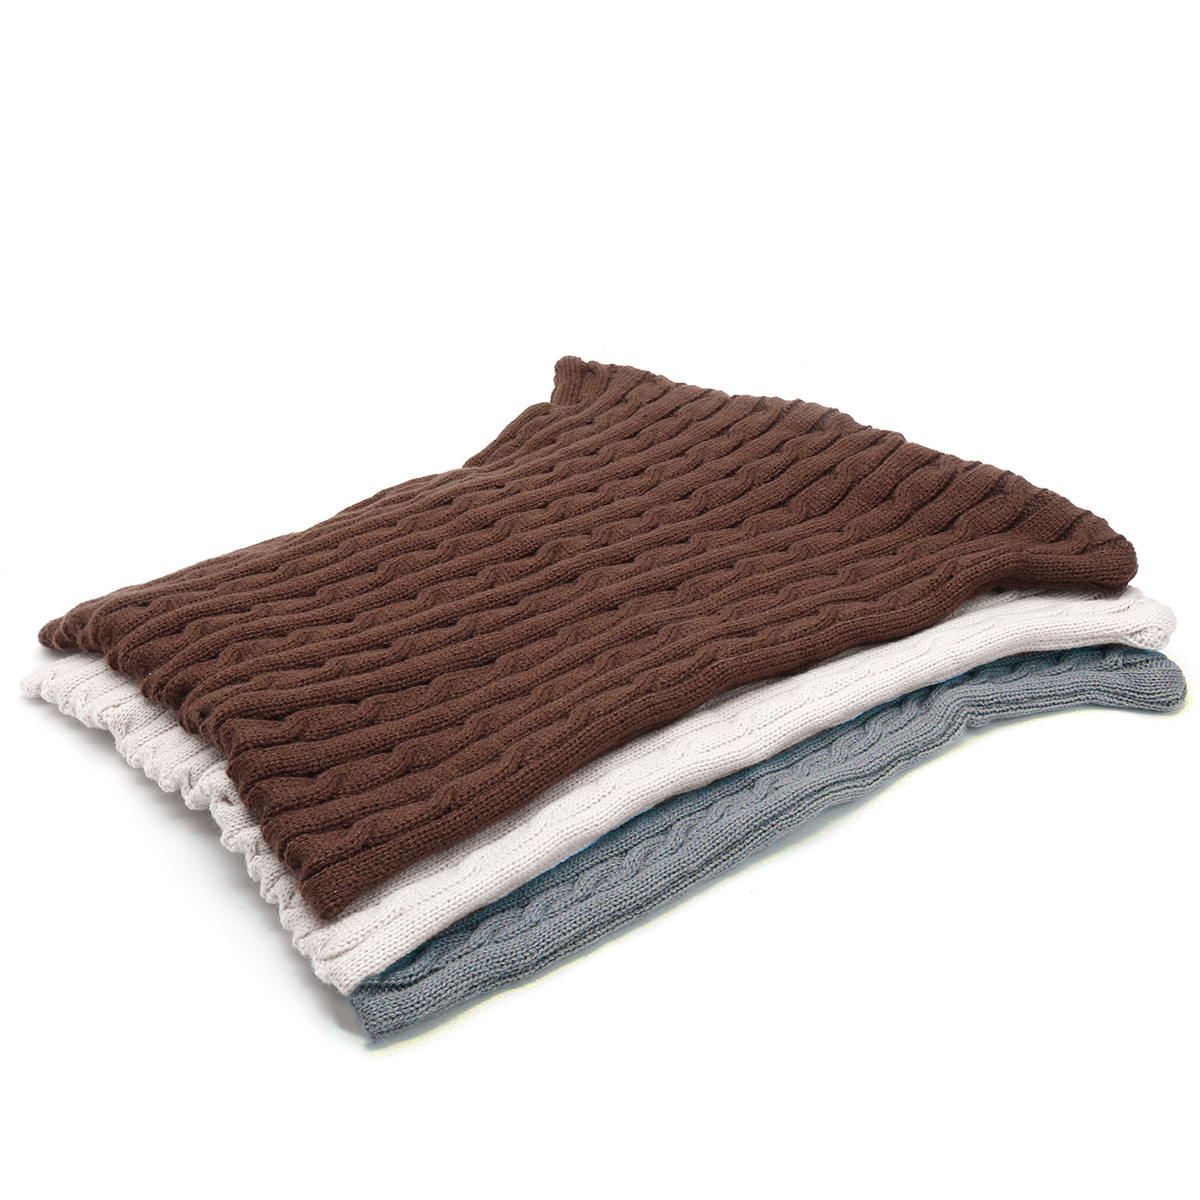 Knit-Fiber-Pillows-Throw-Pillow-Case-Sofa-Waist-Cushion-Cover-Home-Decorative-1641023-8